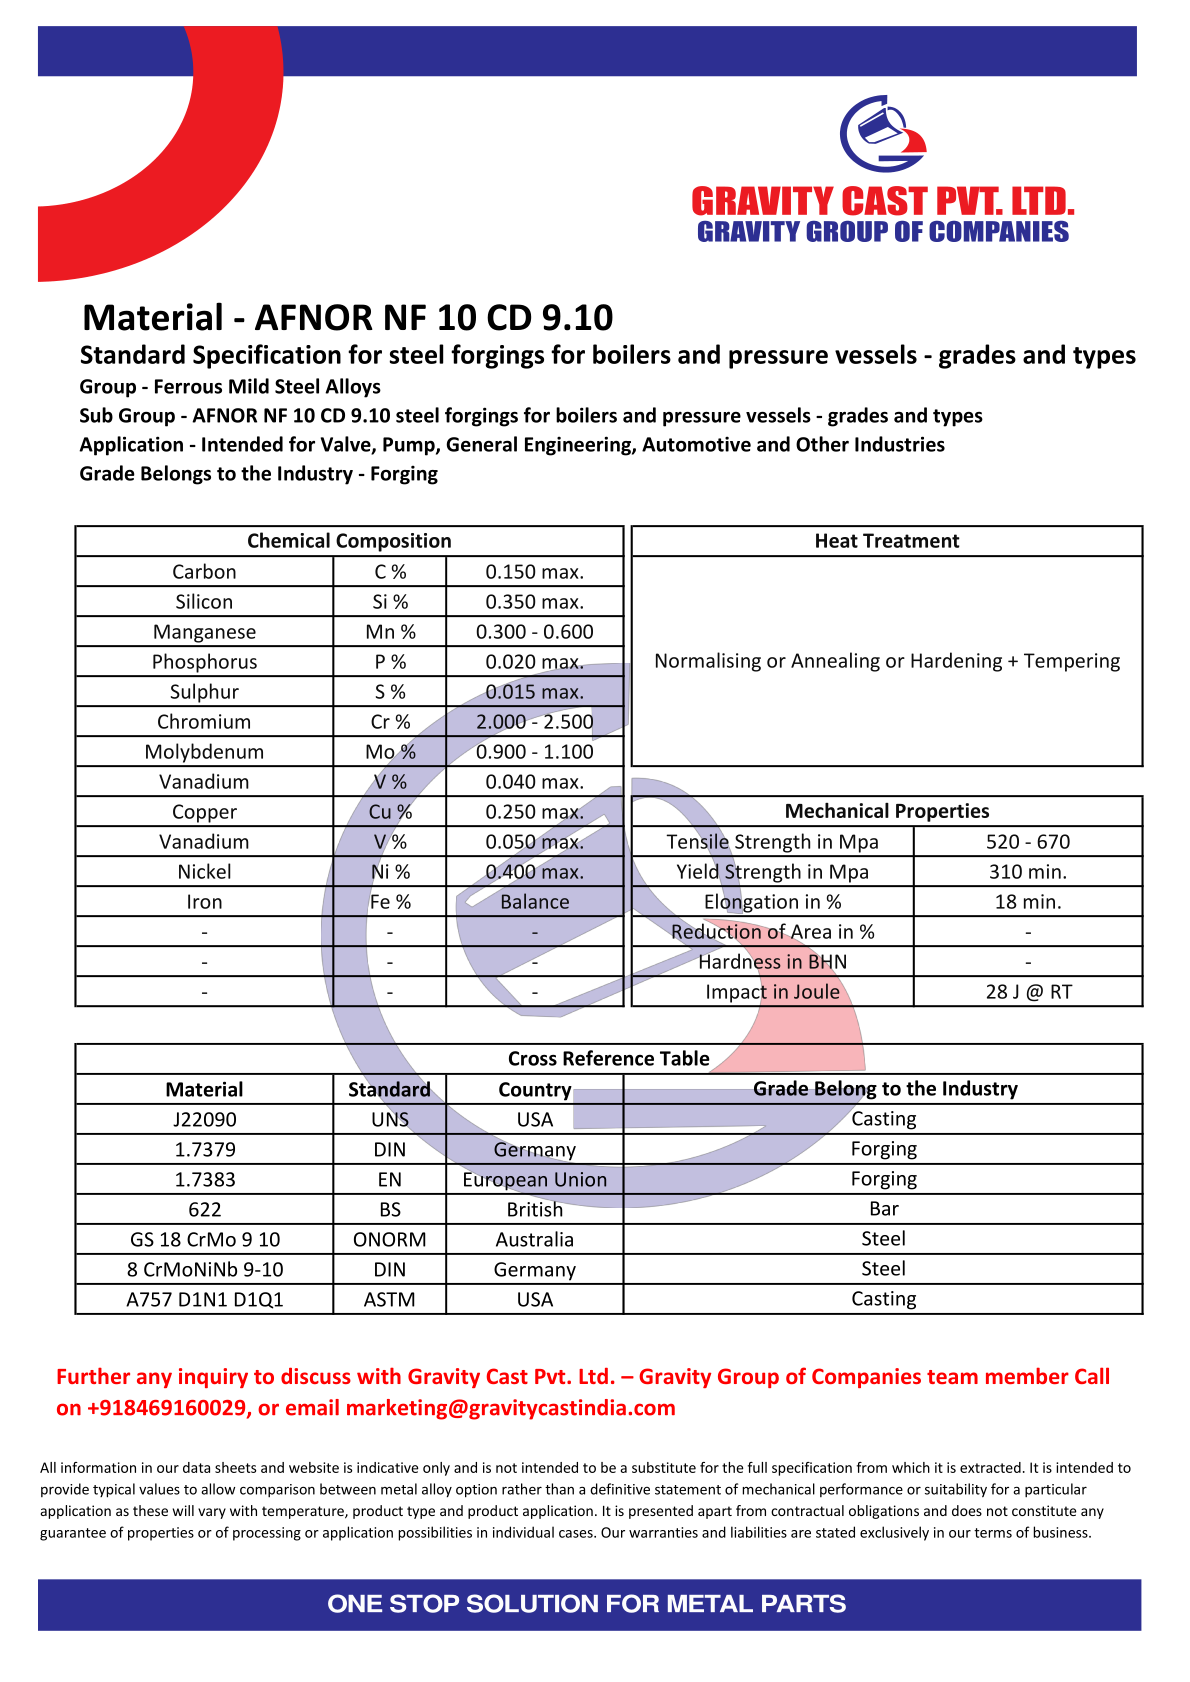 AFNOR NF 10 CD 9.10.pdf